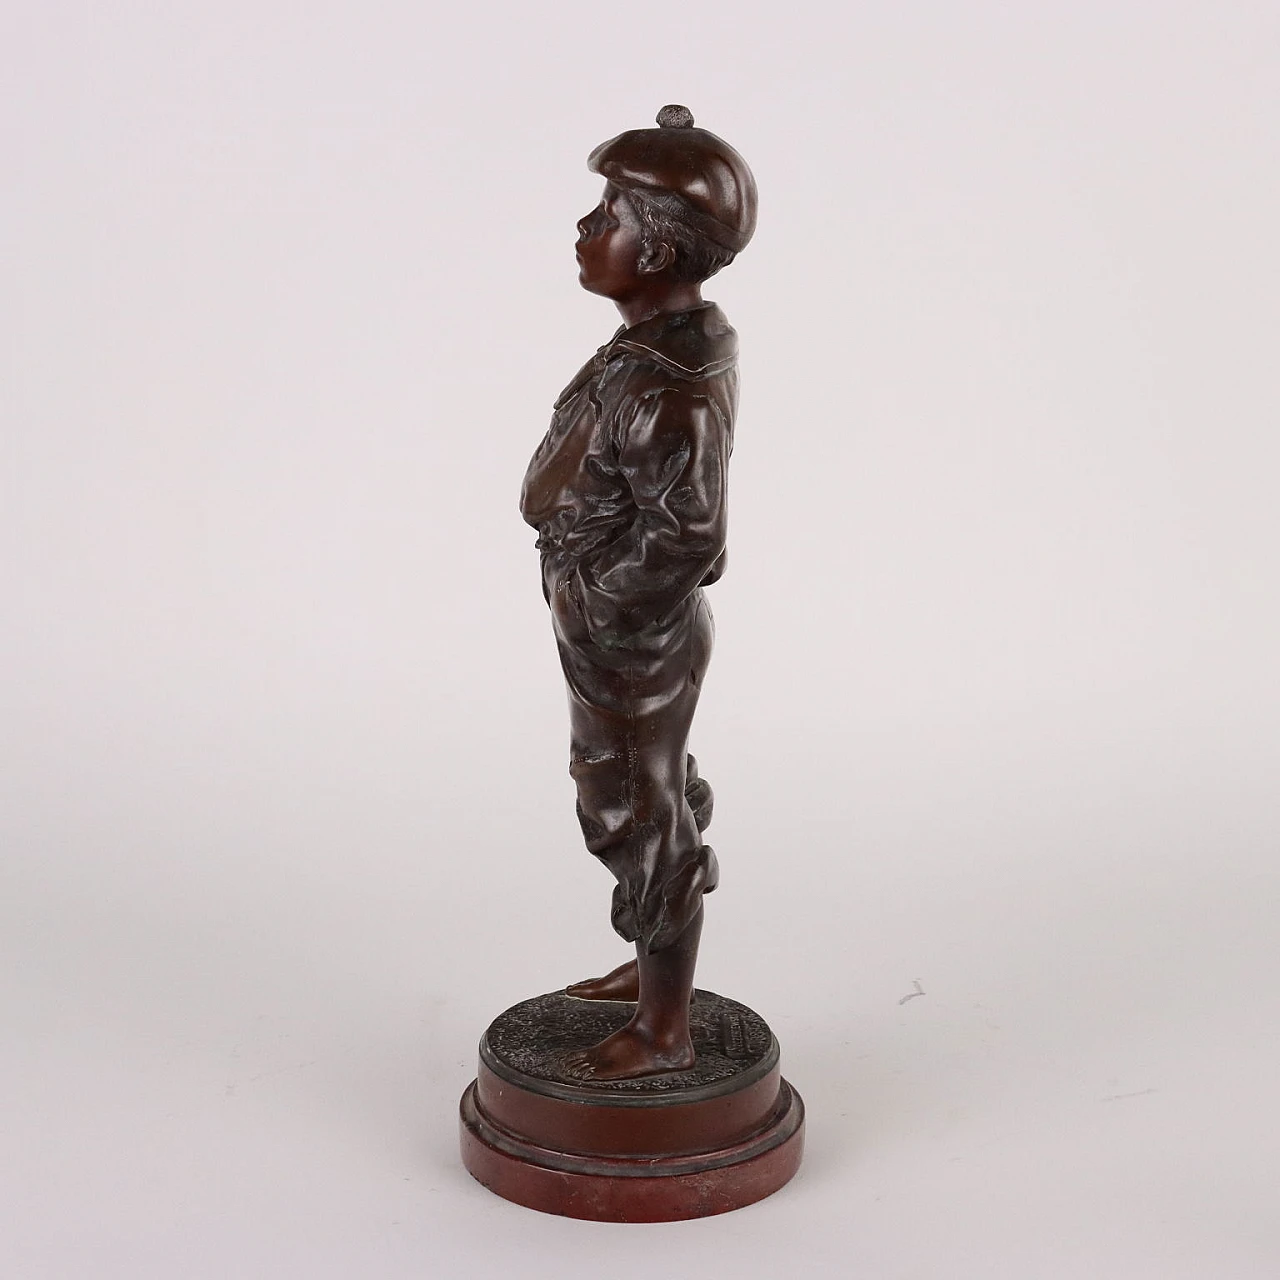 Whistling boy, bronze sculpture on marble base 7